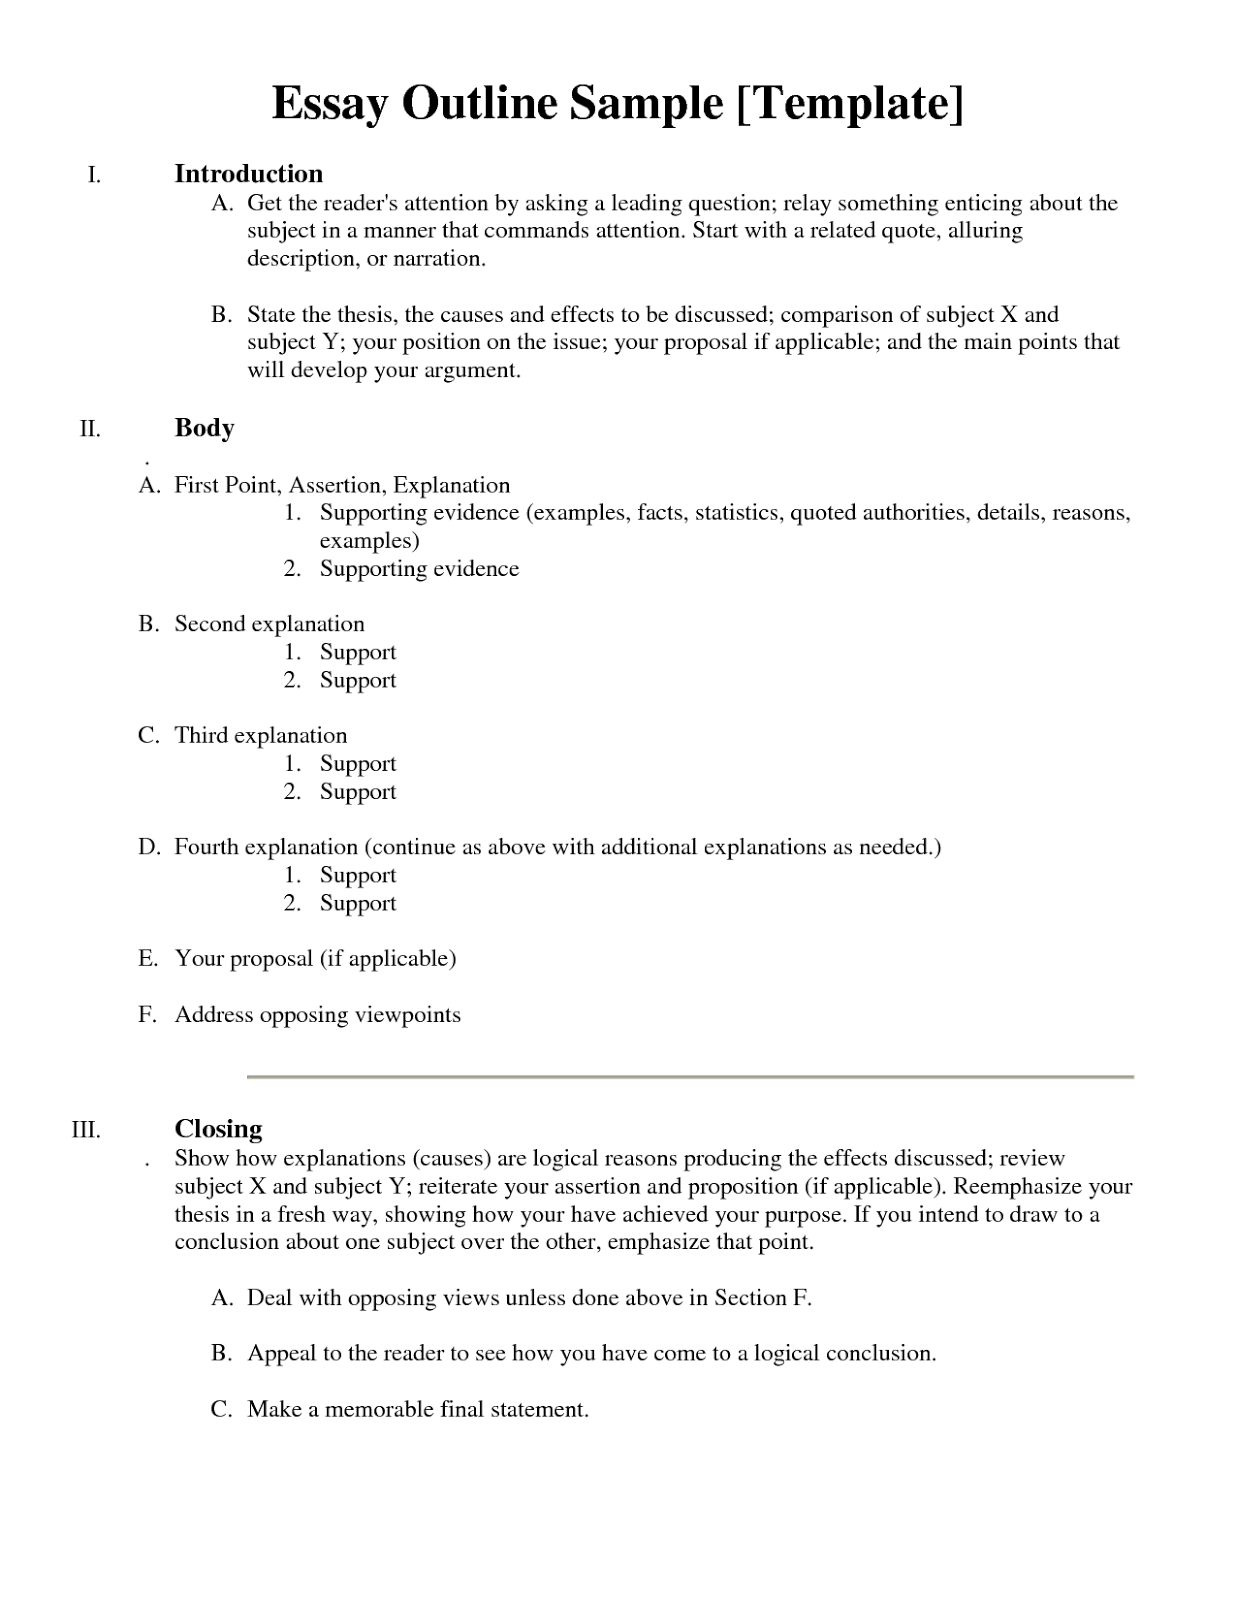 University essay structure template